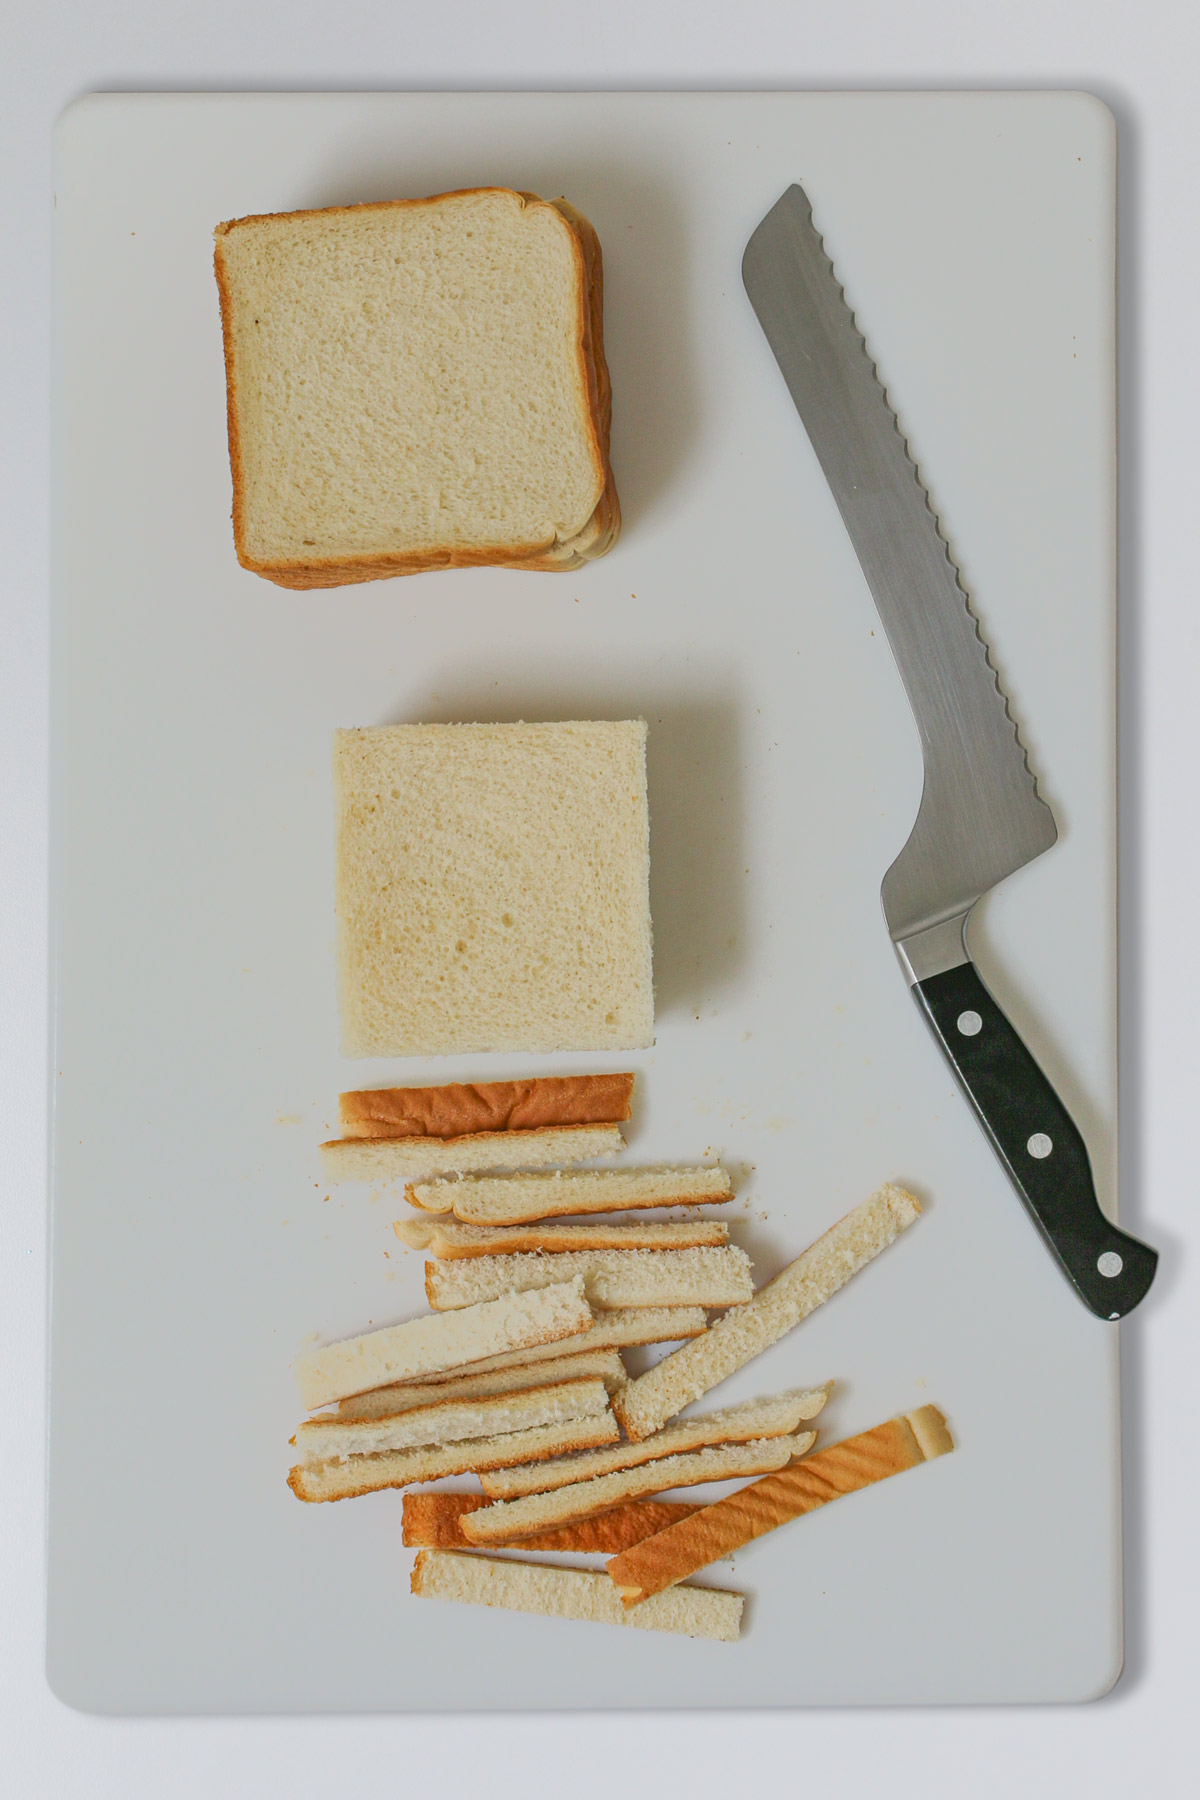 bread on cutting board with bread knife, cutting off crusts.